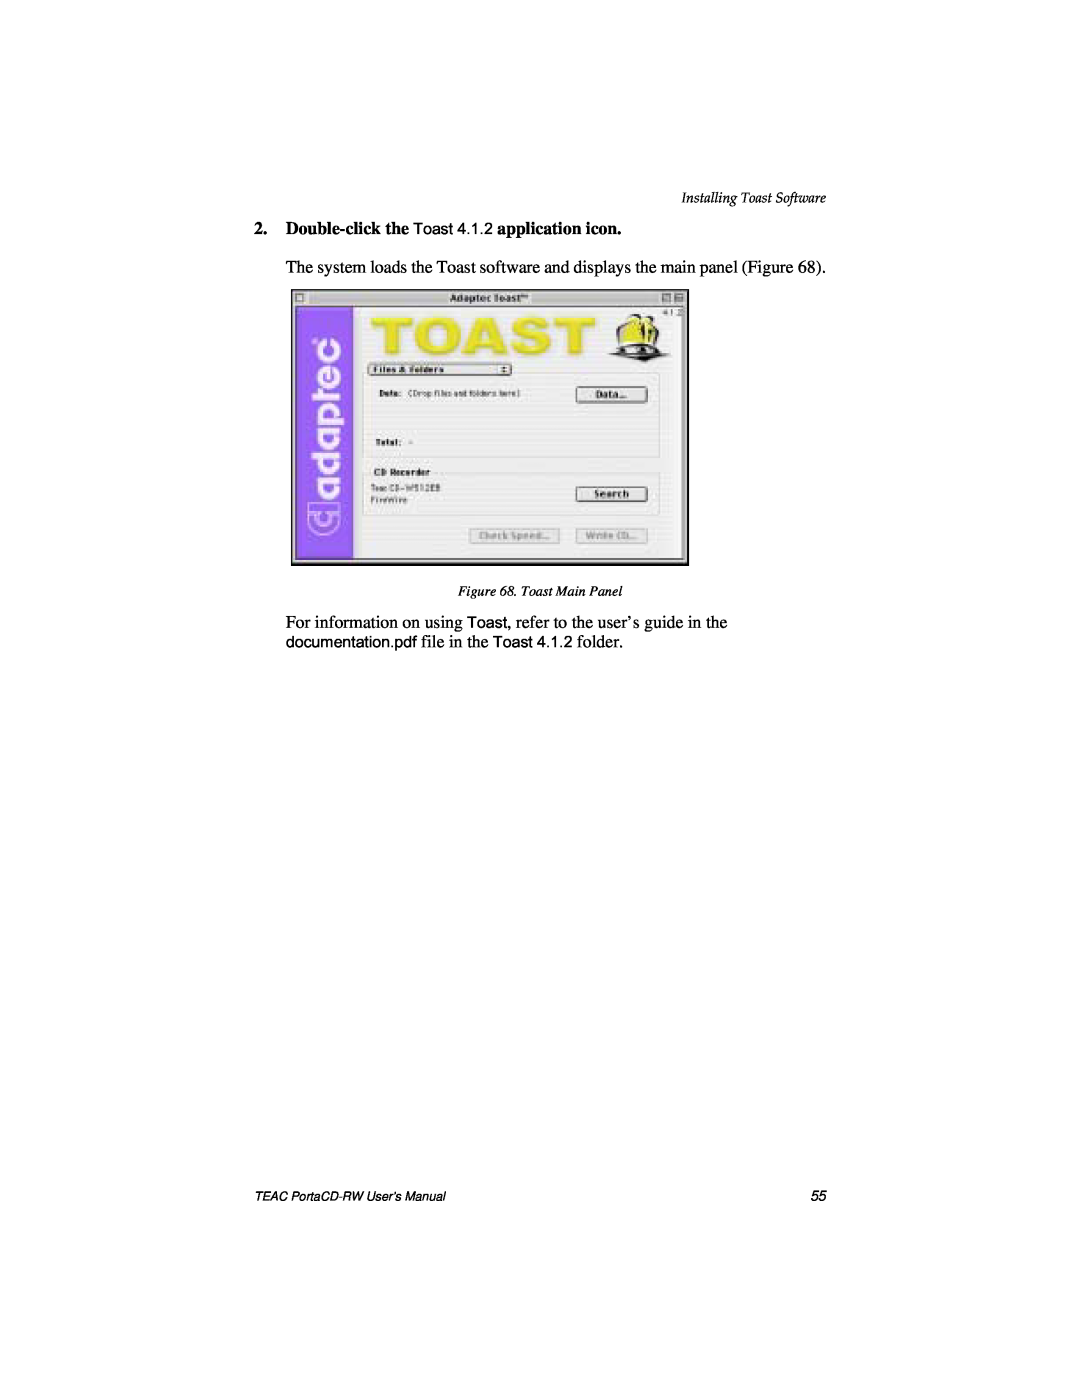 Teac E24E user manual Double-clickthe Toast 4.1.2 application icon, Installing Toast Software, Toast Main Panel 